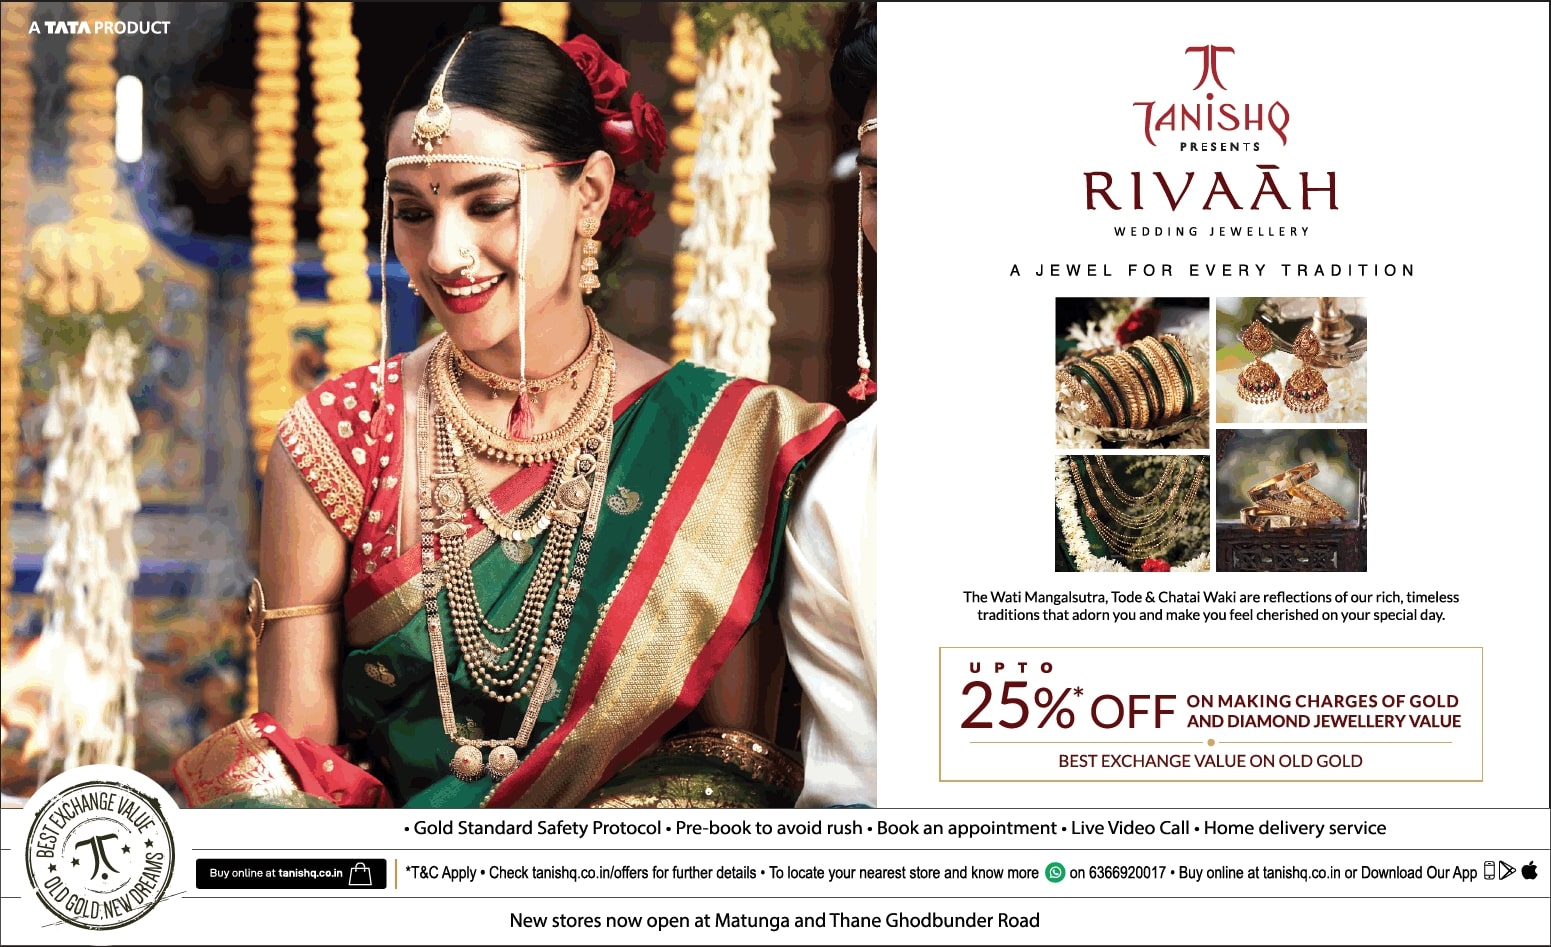 tanishq-presents-rivaah-wedding-jewellery-ad-bombay-times-02-04-2021